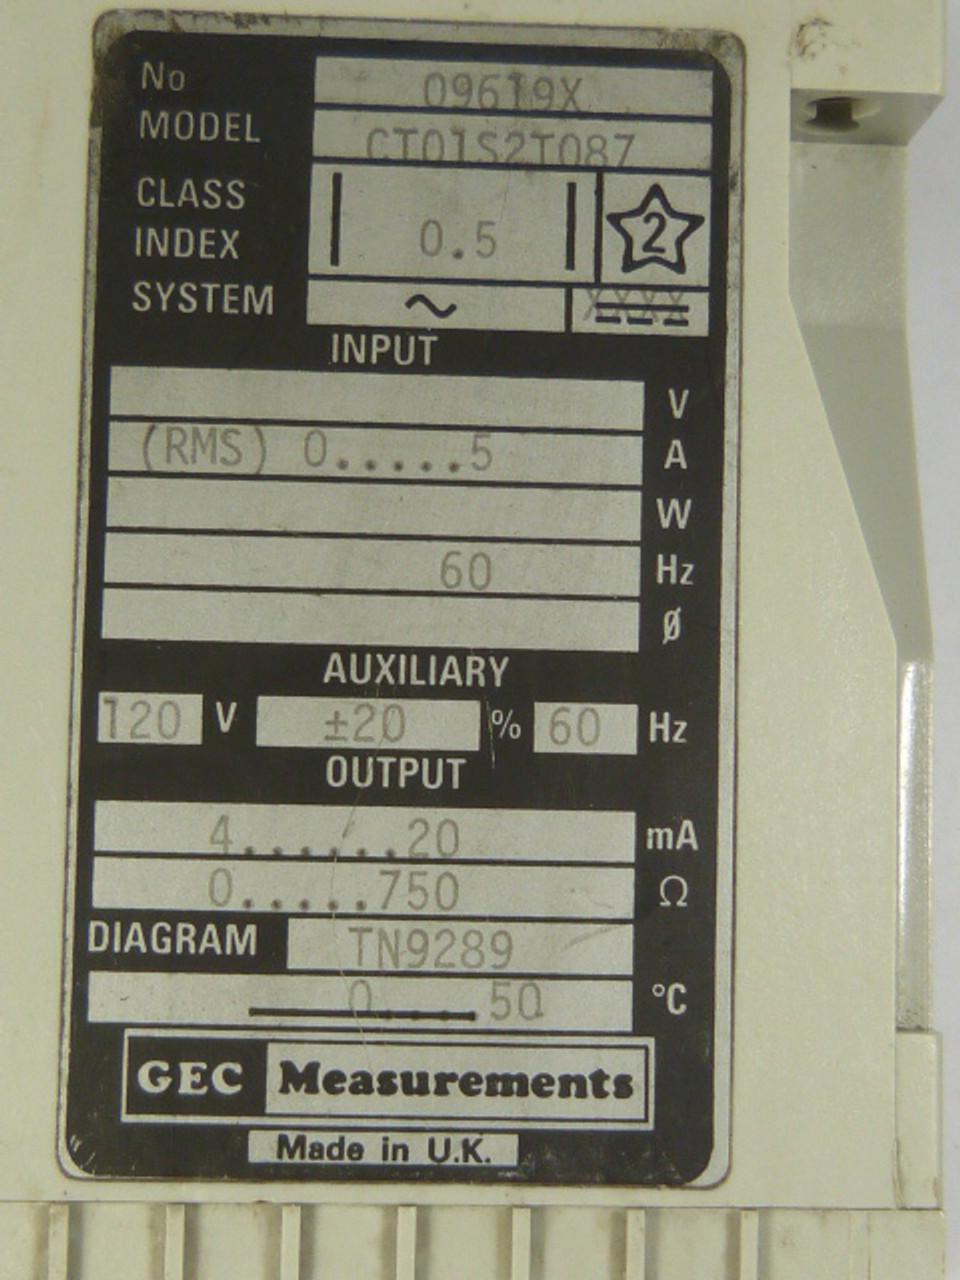 GEC CT01S2T087 Transducer 120V 5A 60Hz USED